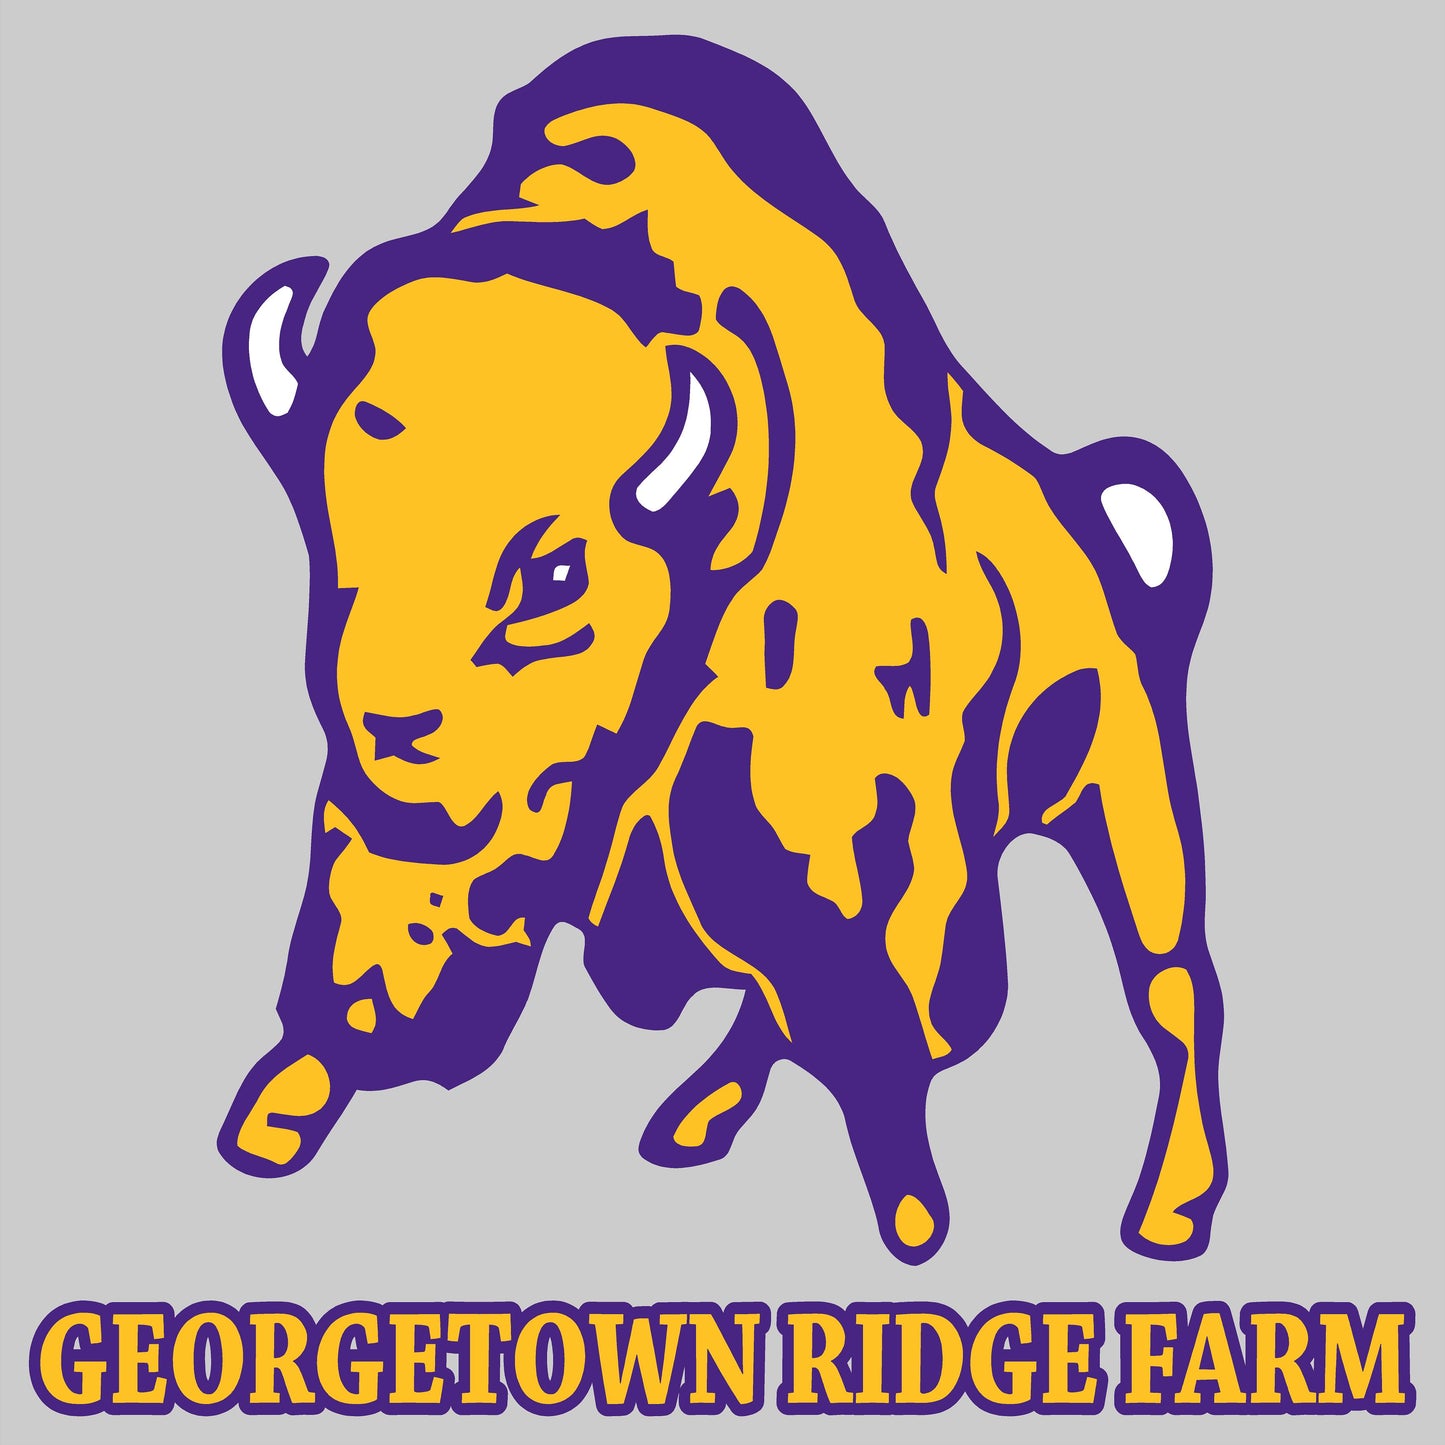 Georgetown-Ridge Farm Hype Subscription